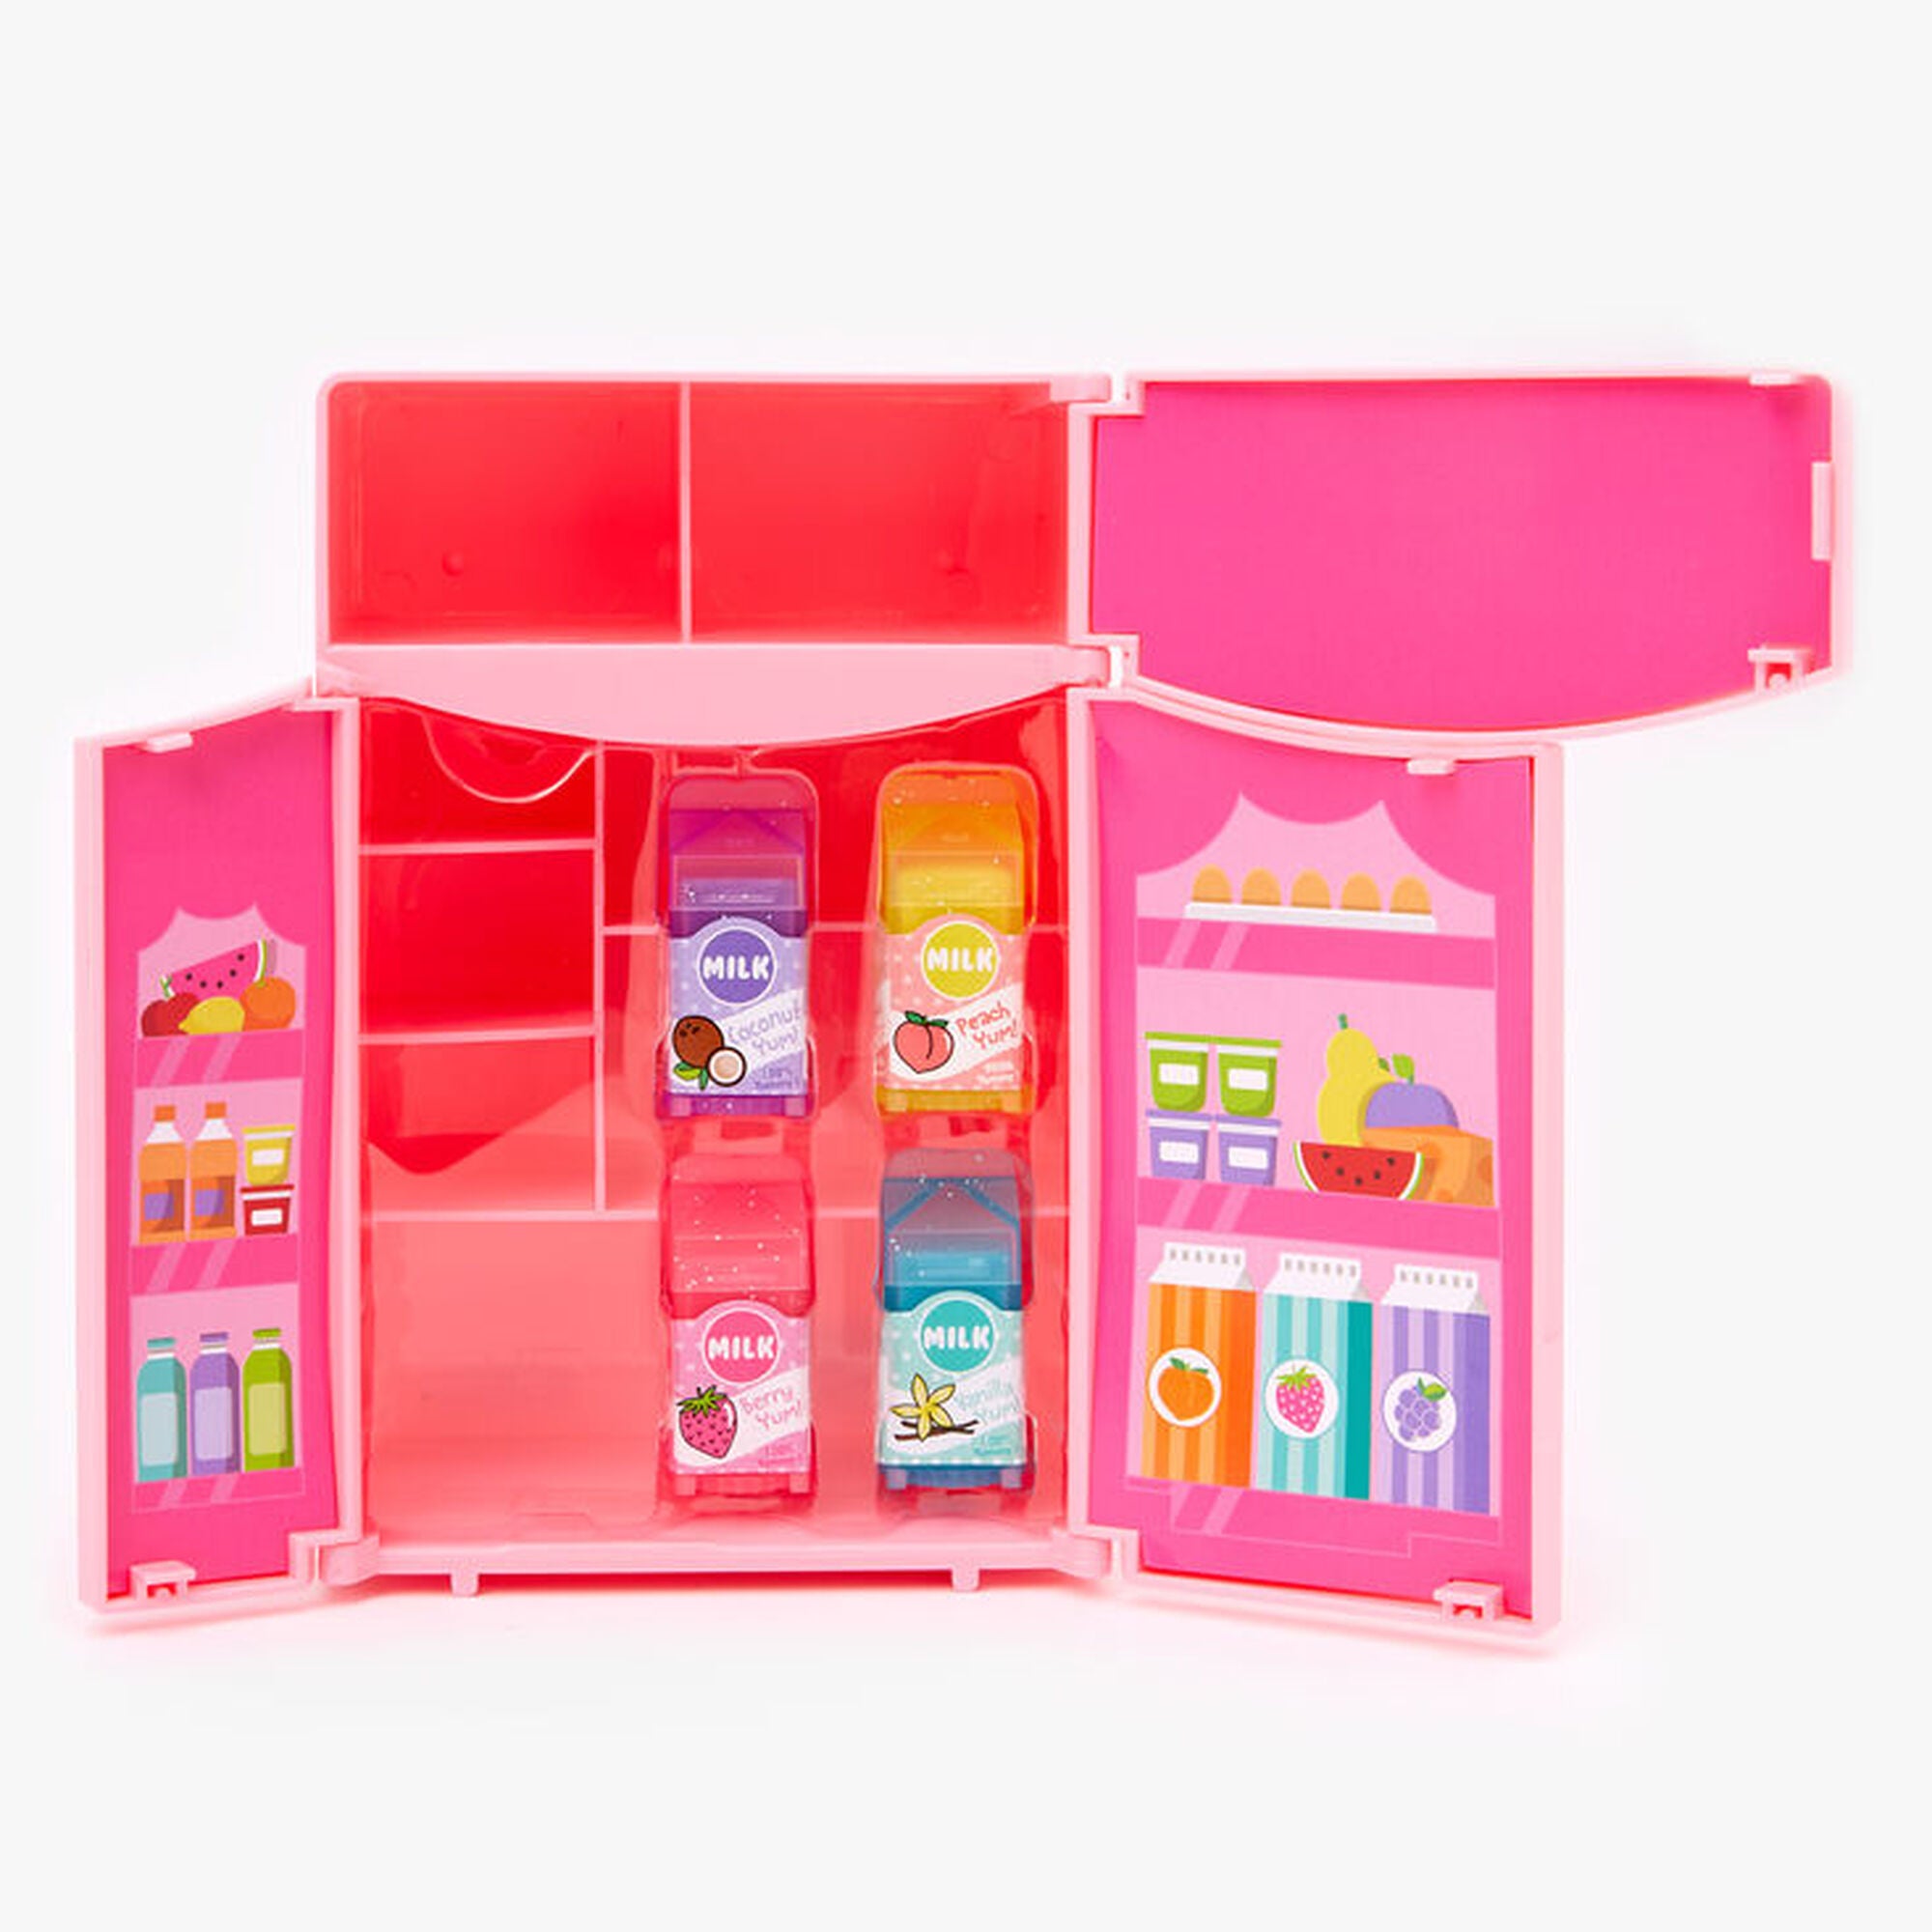 Mini Fridge Lip Gloss Set - The Toy Box Hanover